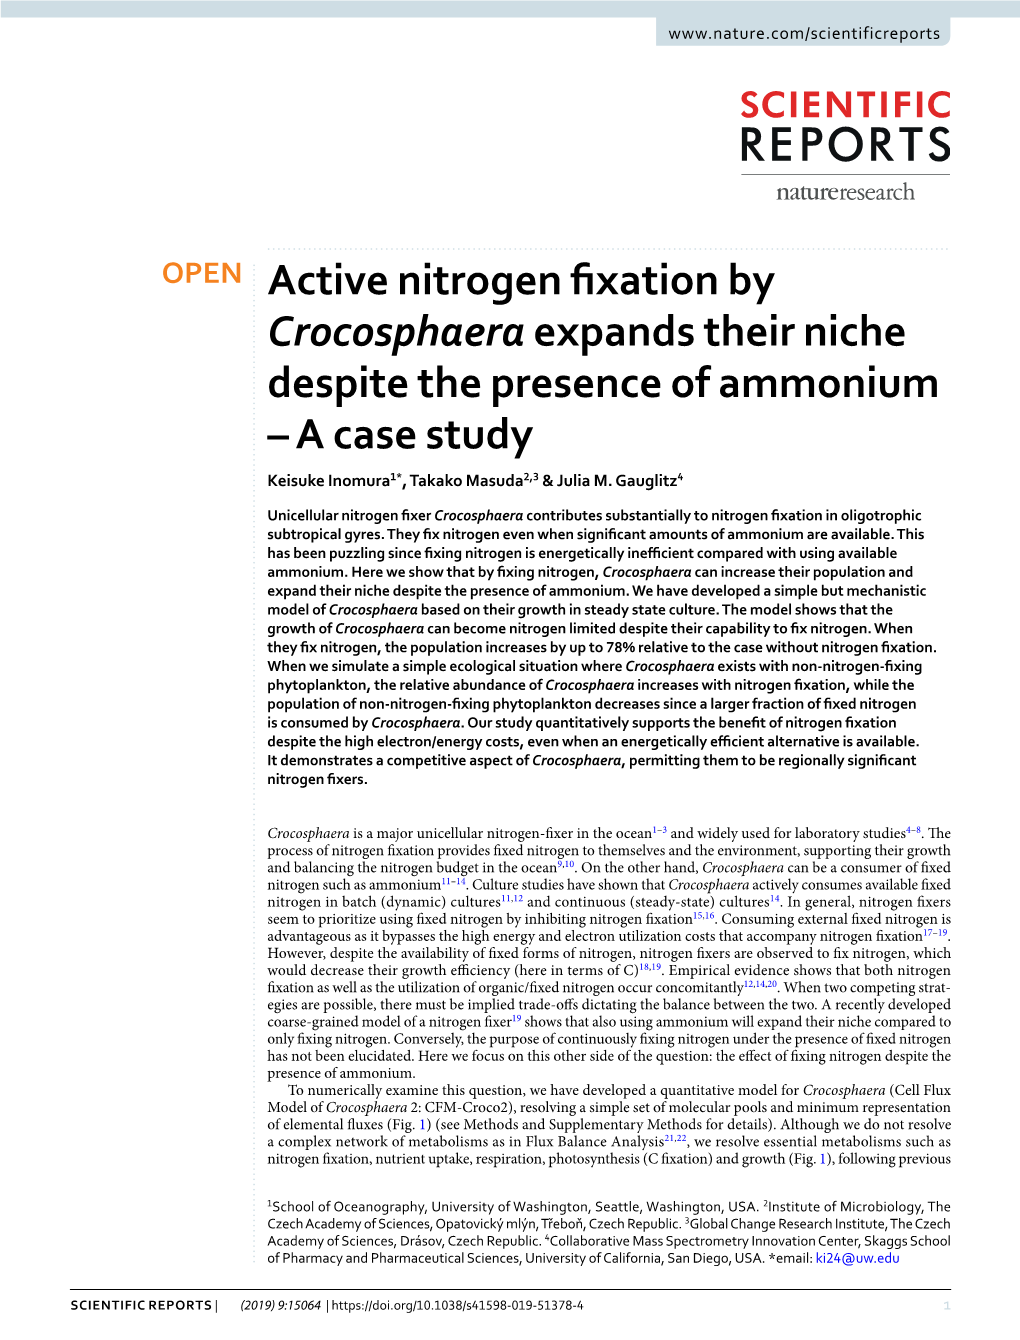 Active Nitrogen Fixation by Crocosphaera Expands